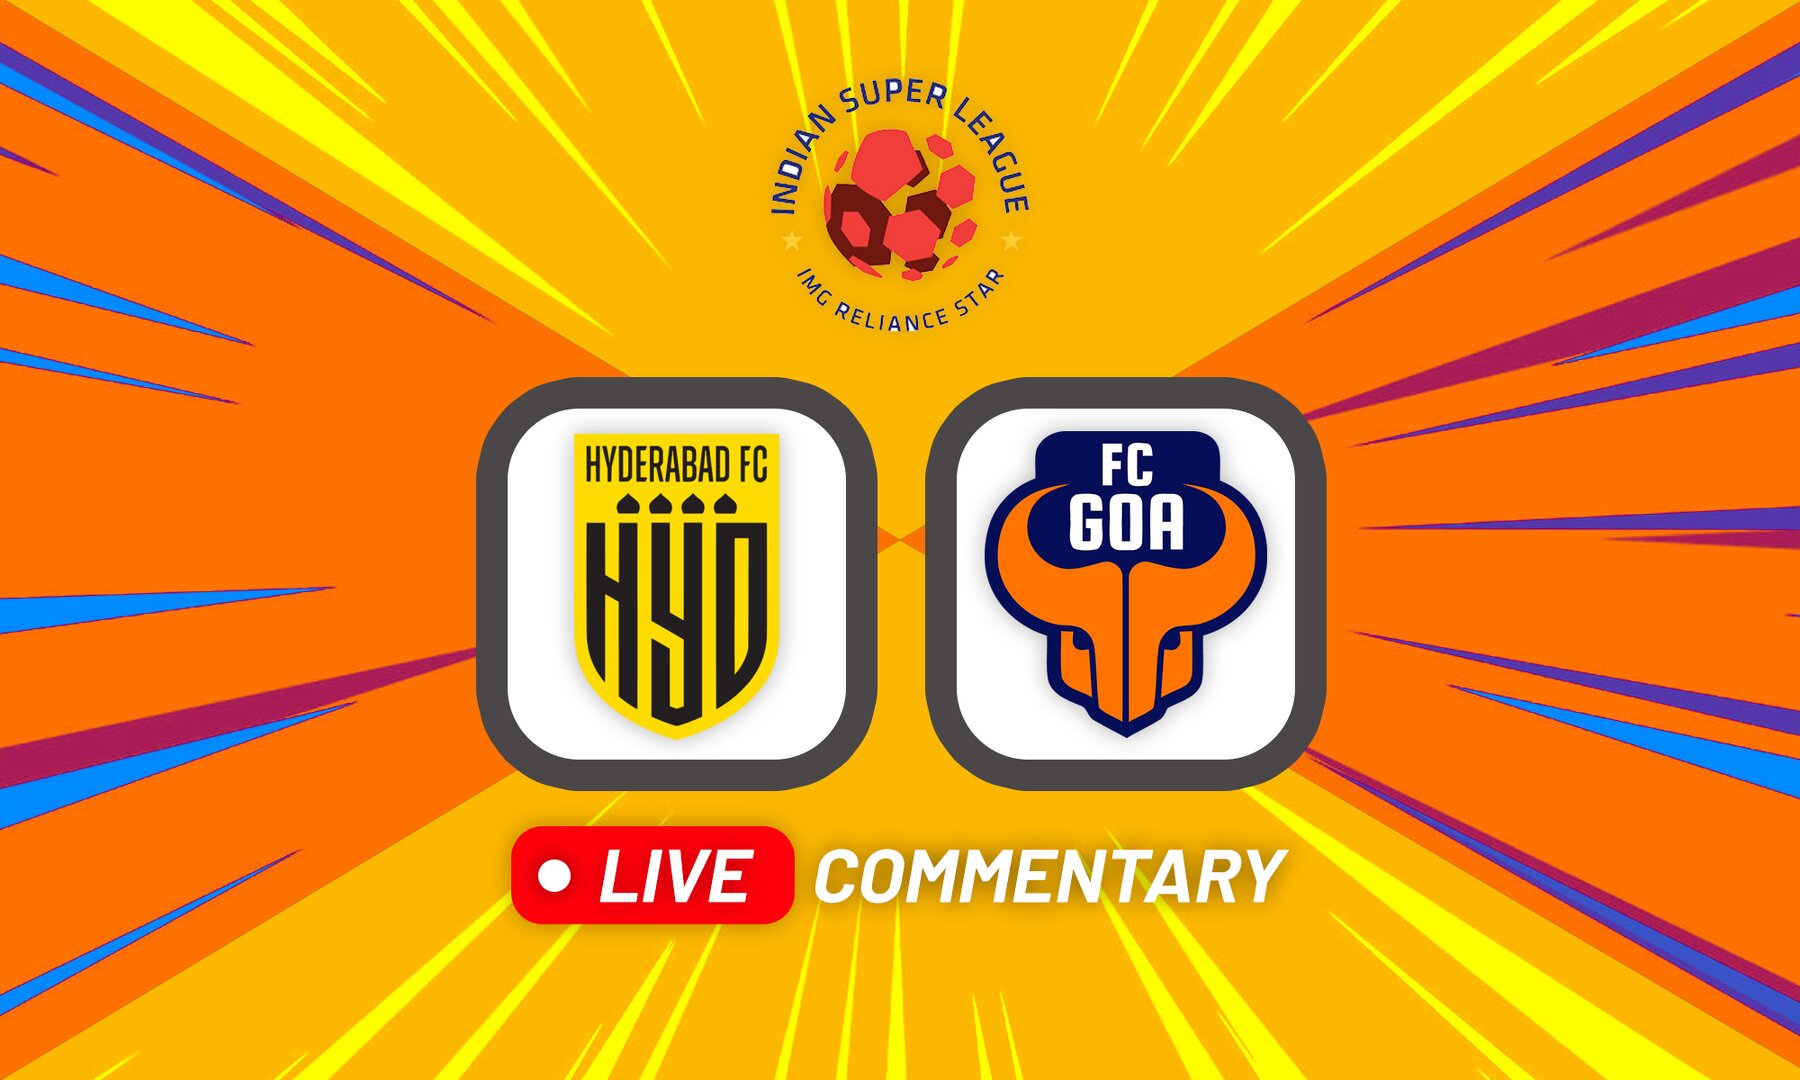 Hyderabad FC vs FC Goa Live Commentary